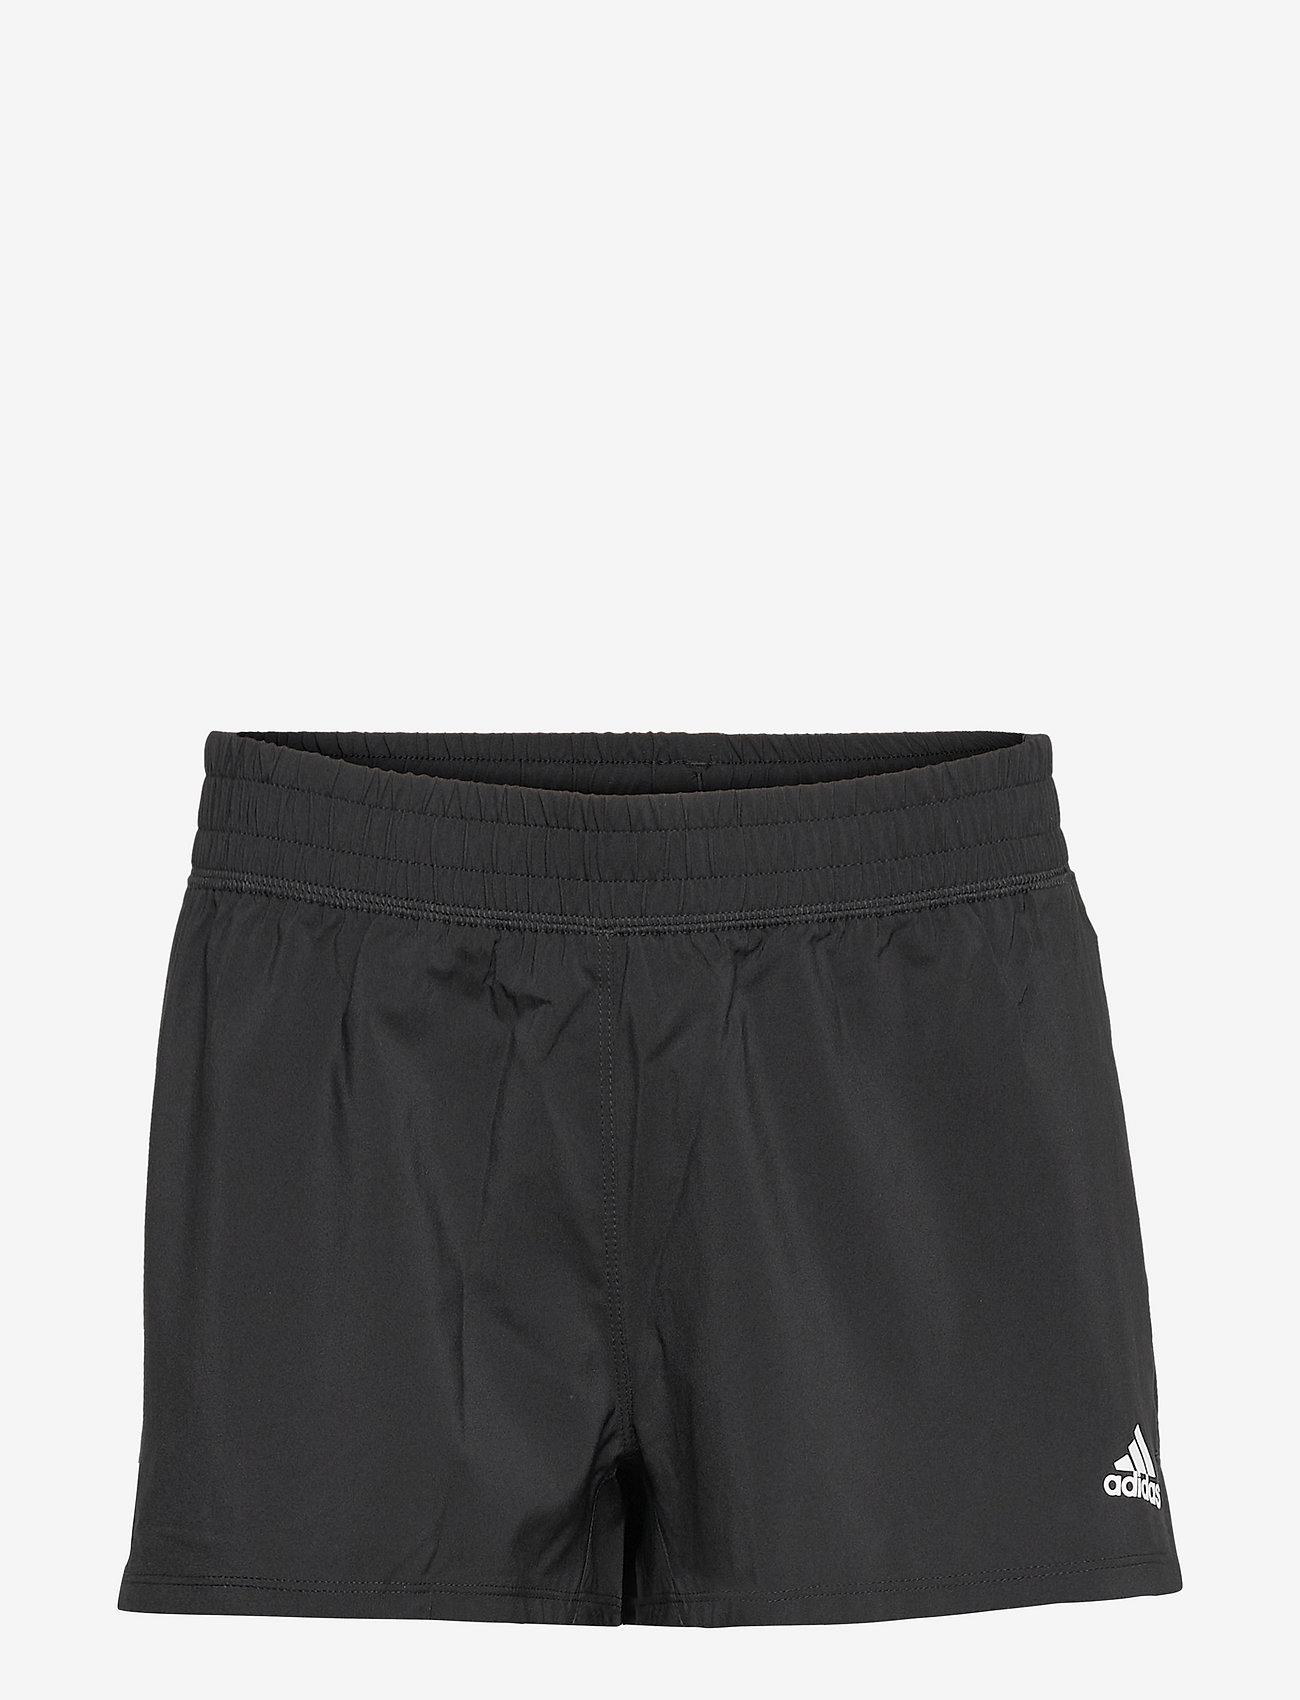 adidas Performance - PACER 3S WVN - trening shorts - black/white - 0